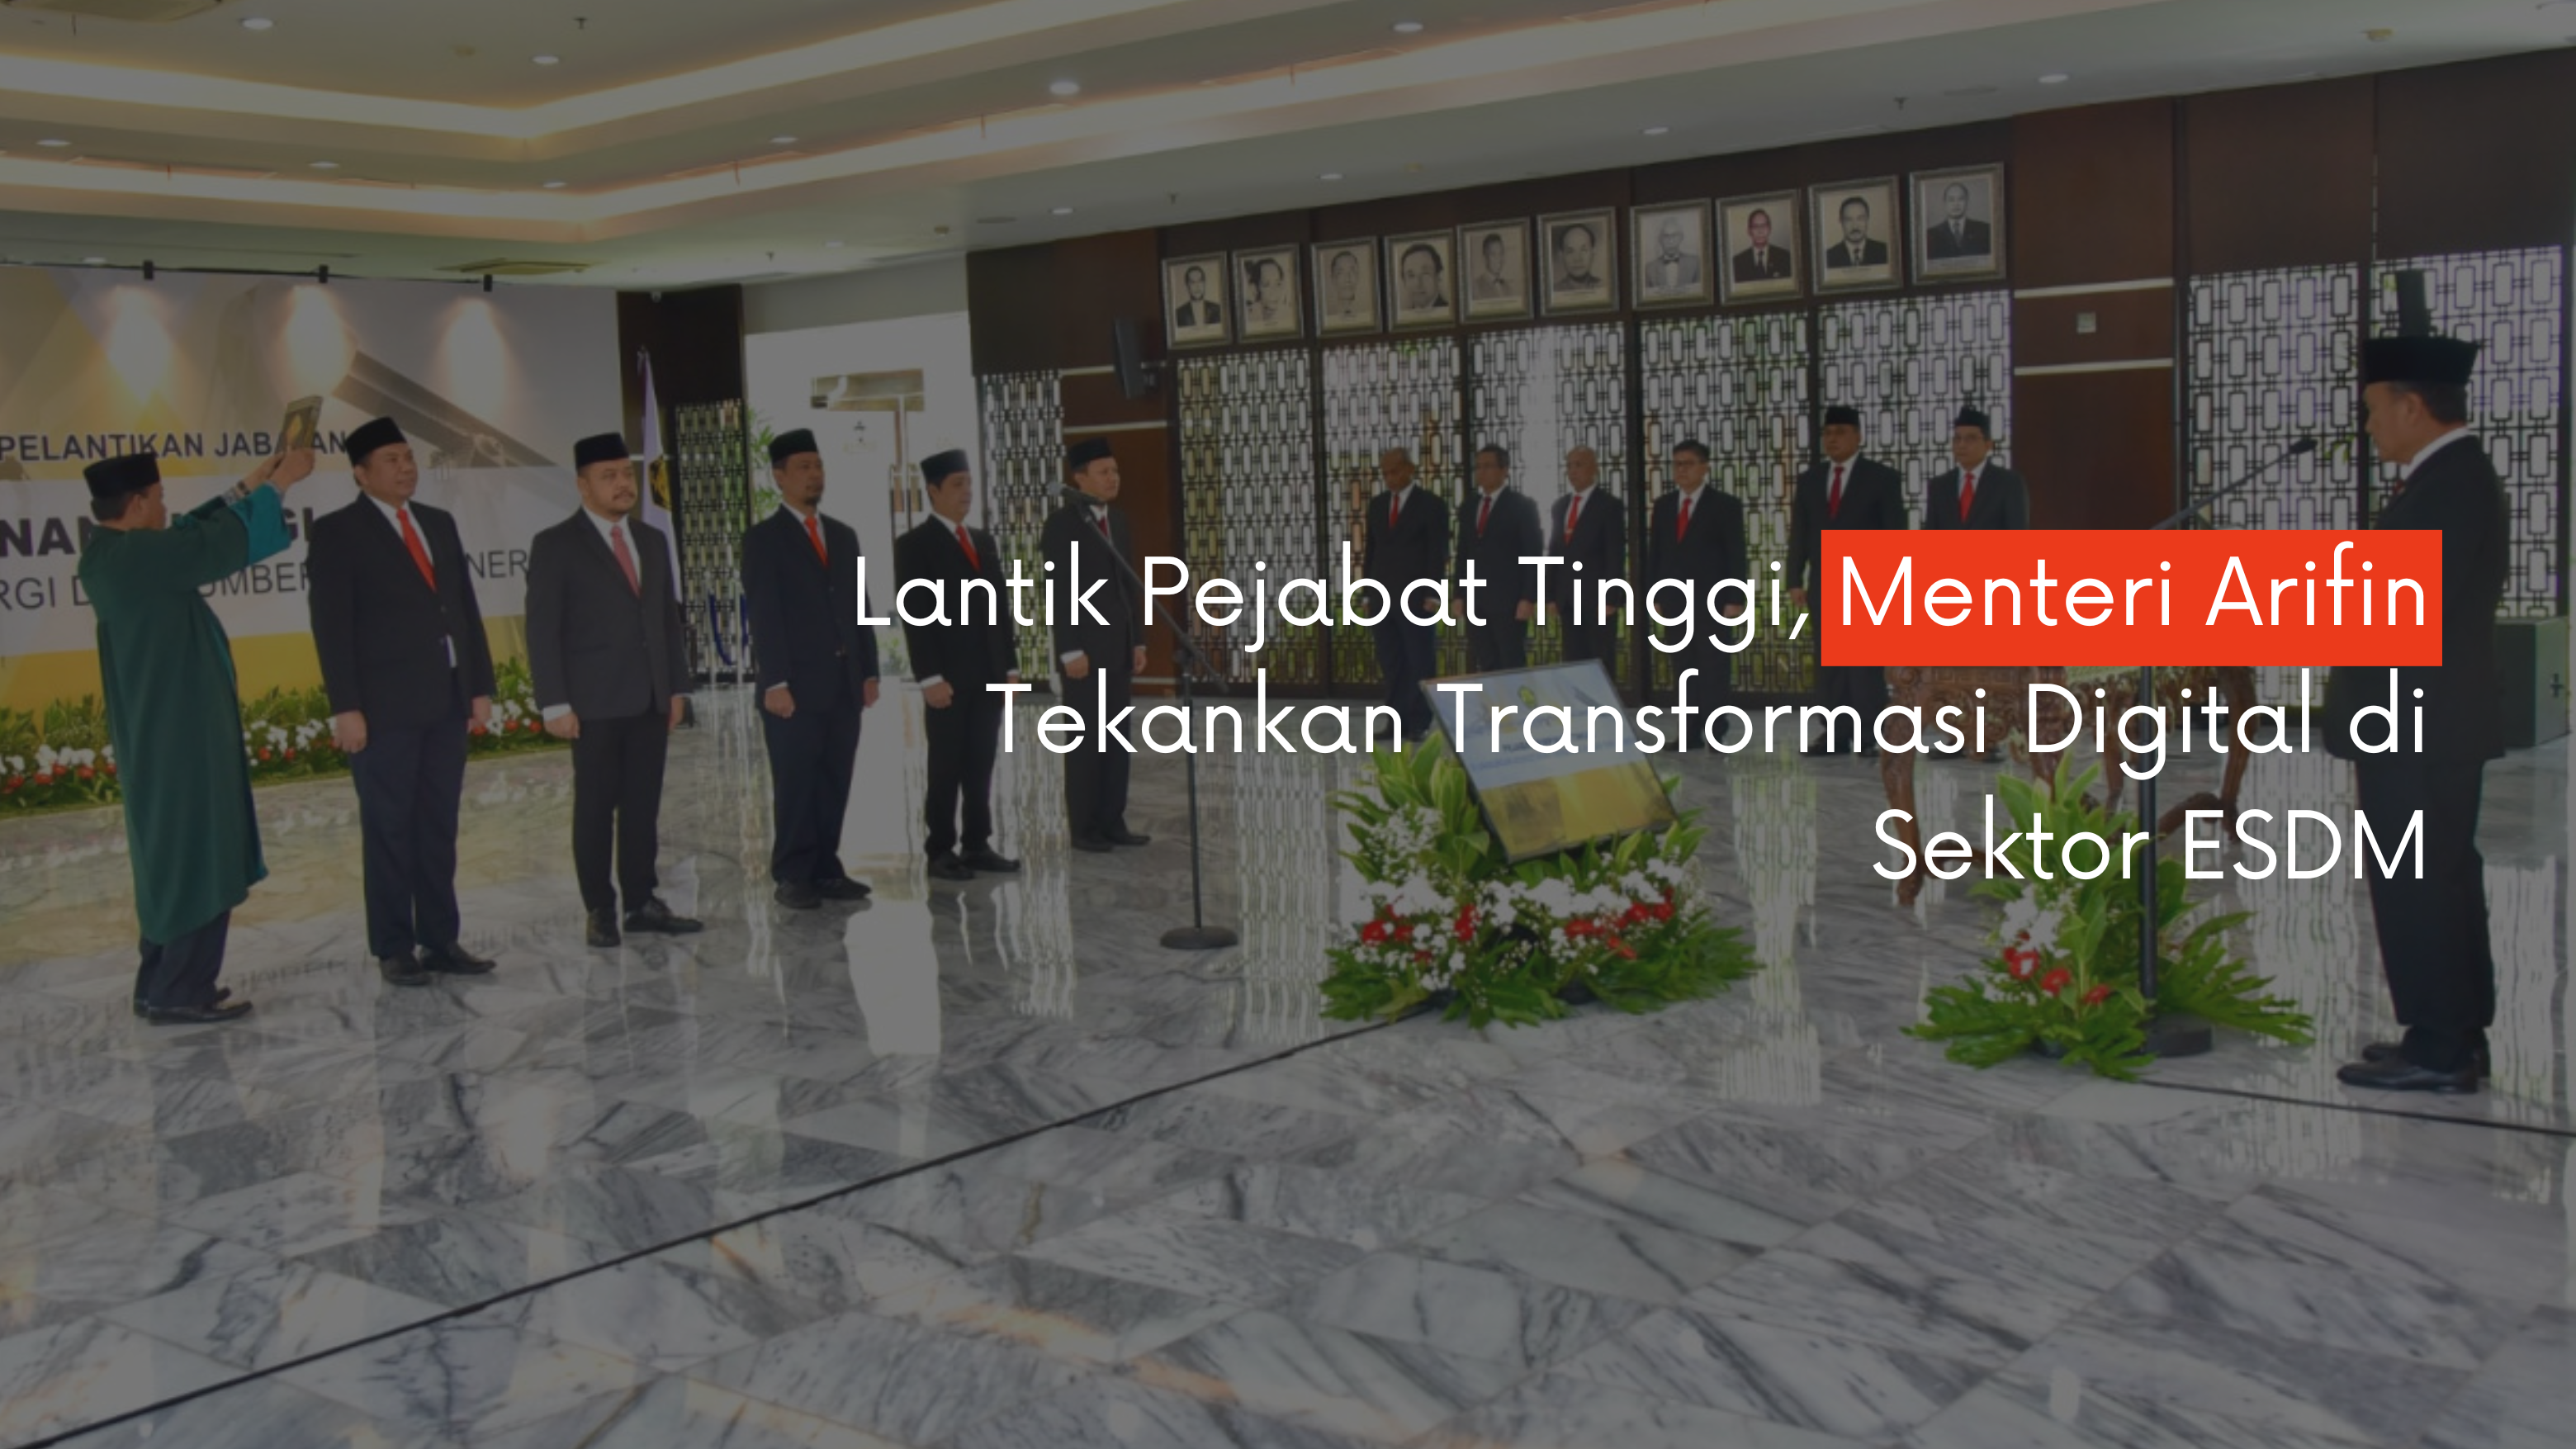 Lantik Pejabat Tinggi, Menteri Arifin Tekankan Transformasi Digital Di Sektor ESDM